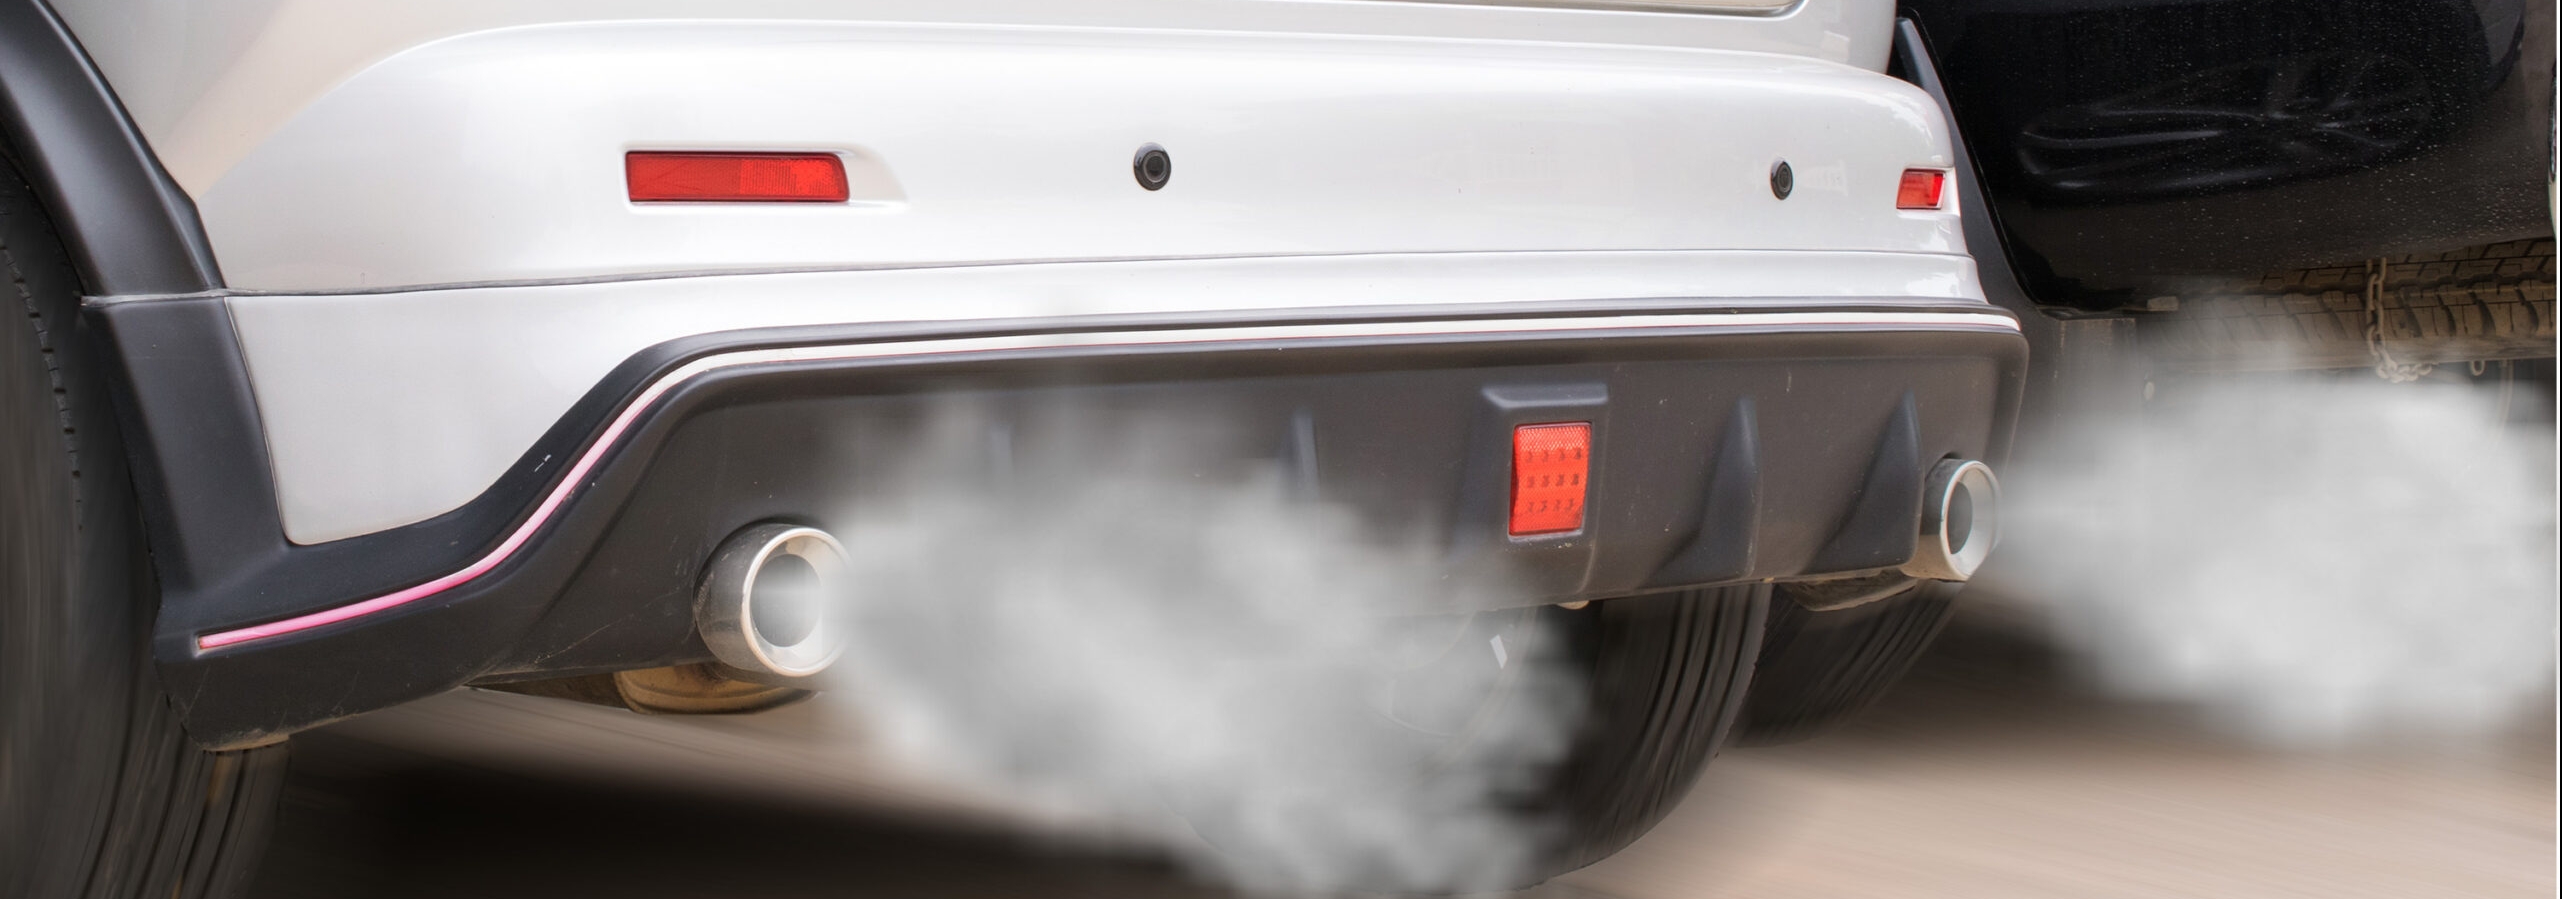 Mengatasi Knalpot Keluar Asap Putih pada Mobil: Tanda dan Penanganan